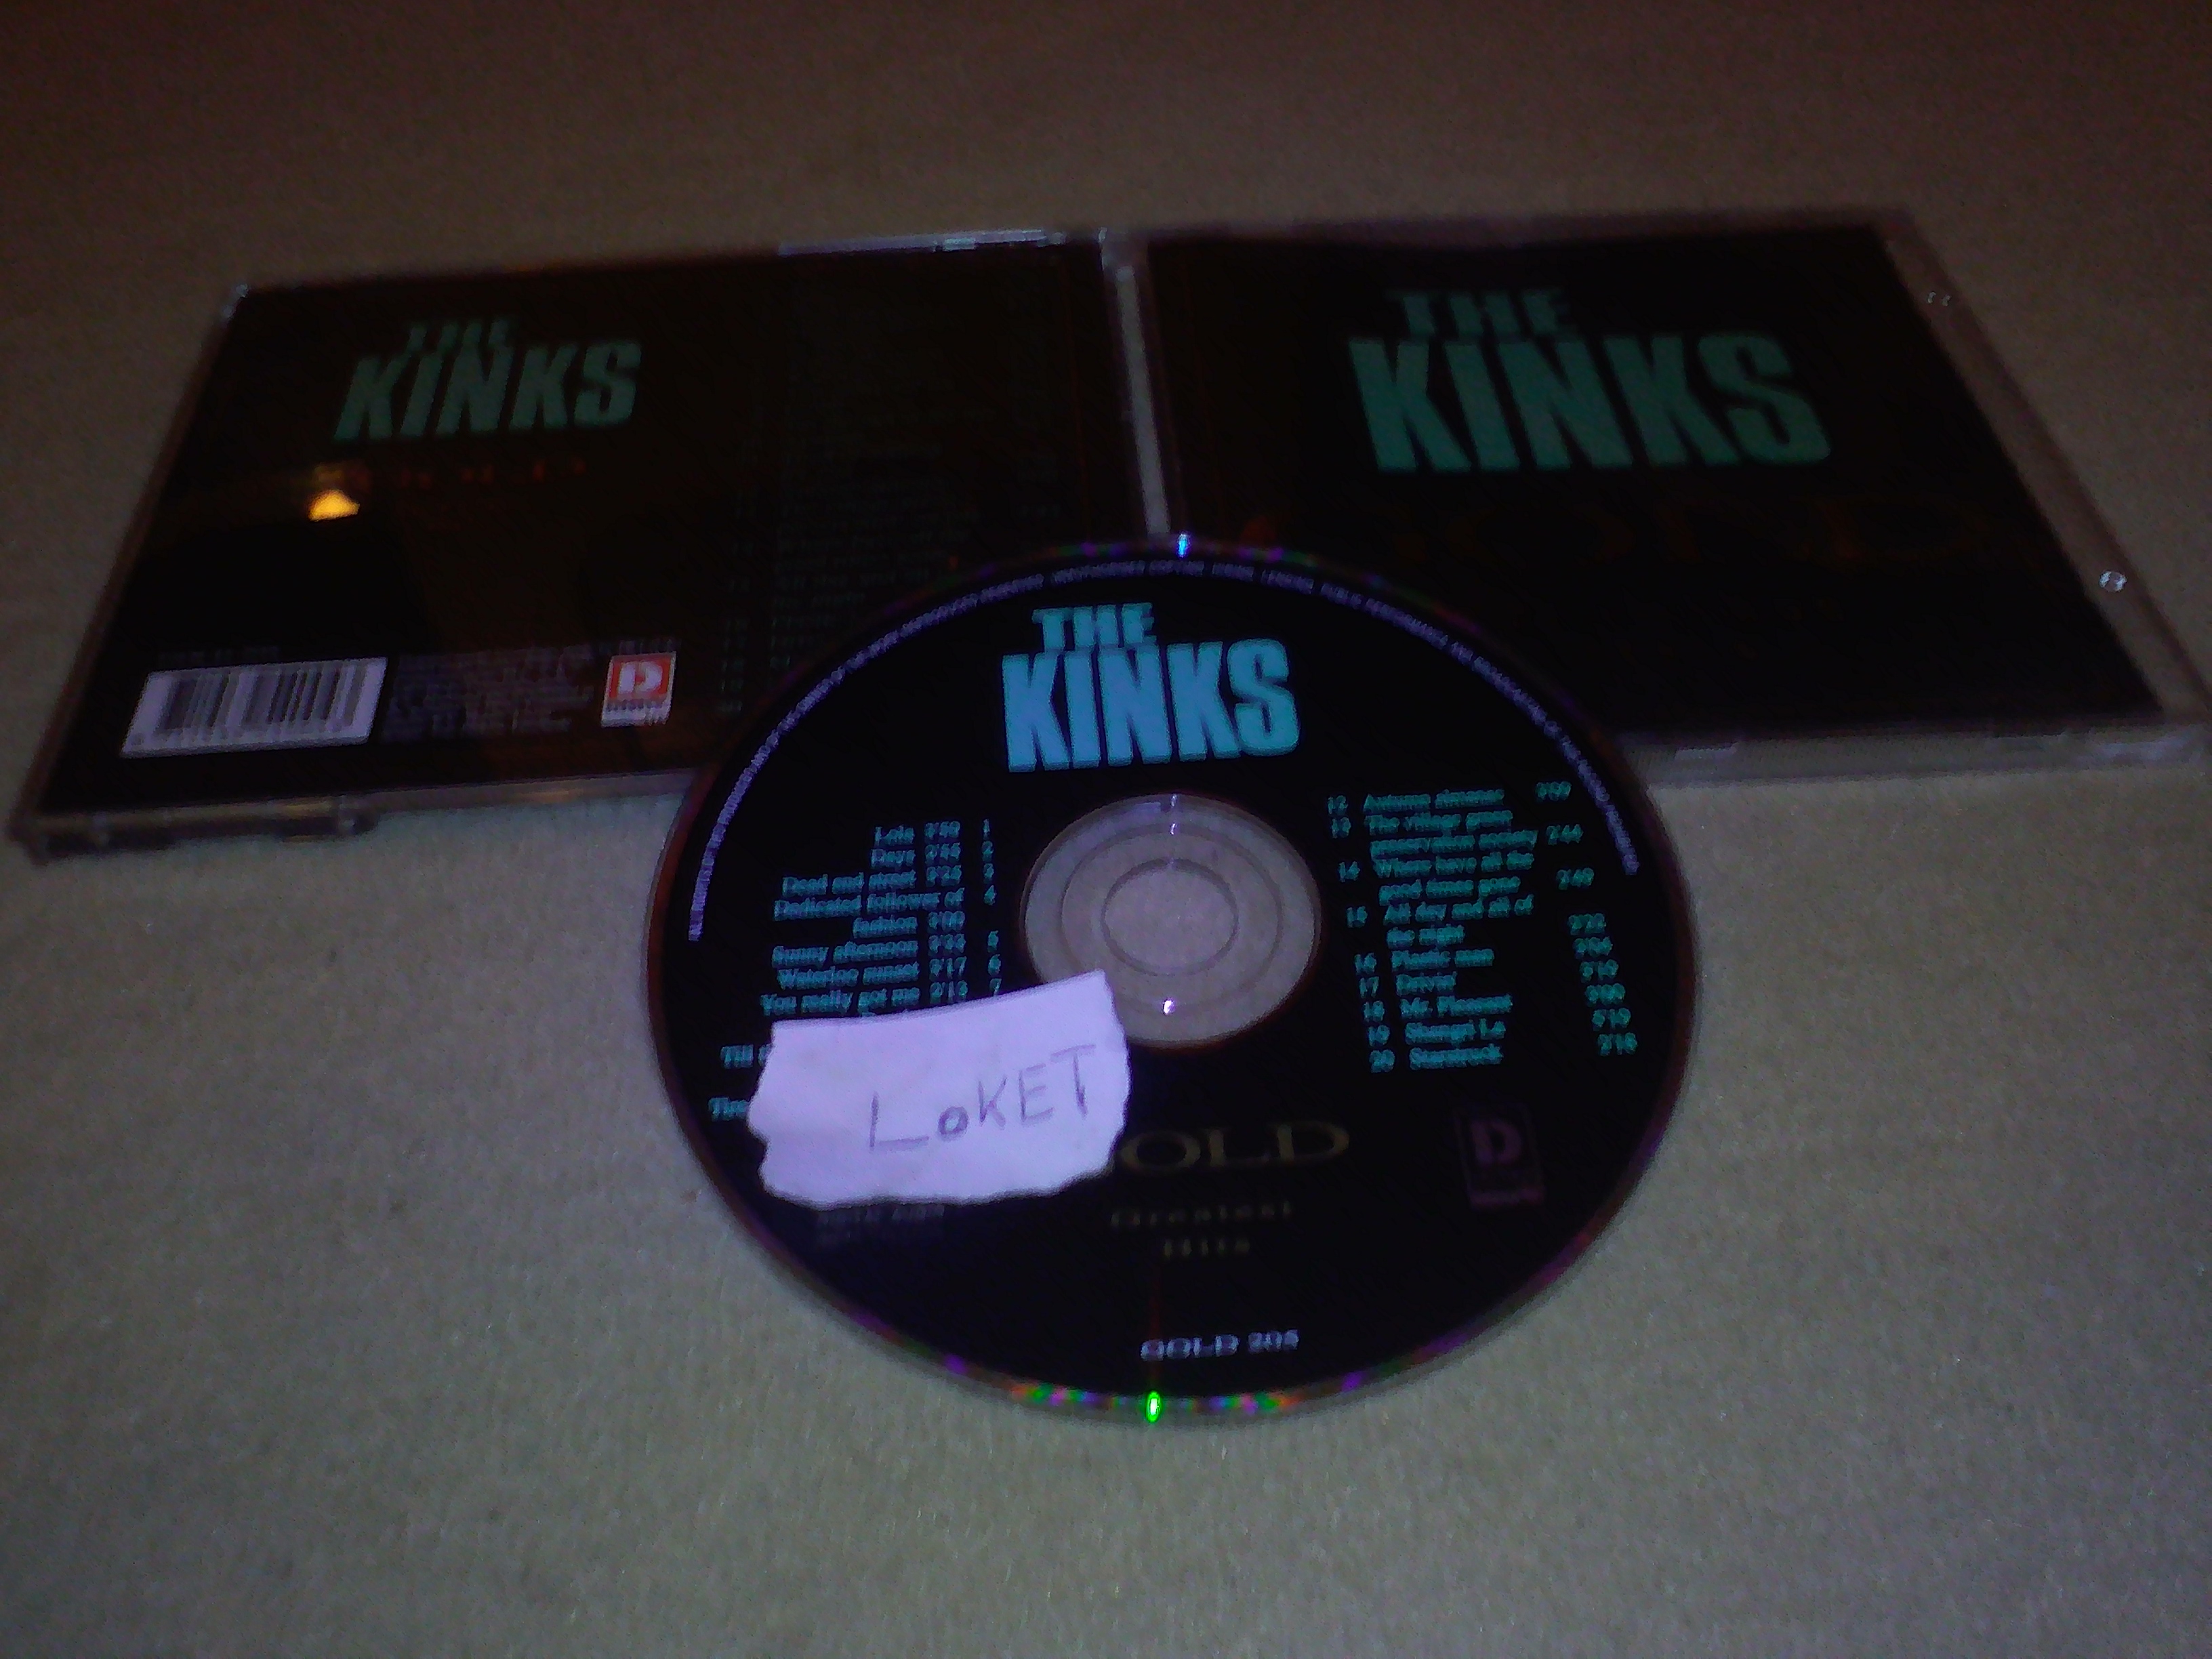 The Kinks-Gold Greatest Hits-CD-FLAC-1993-LoKET